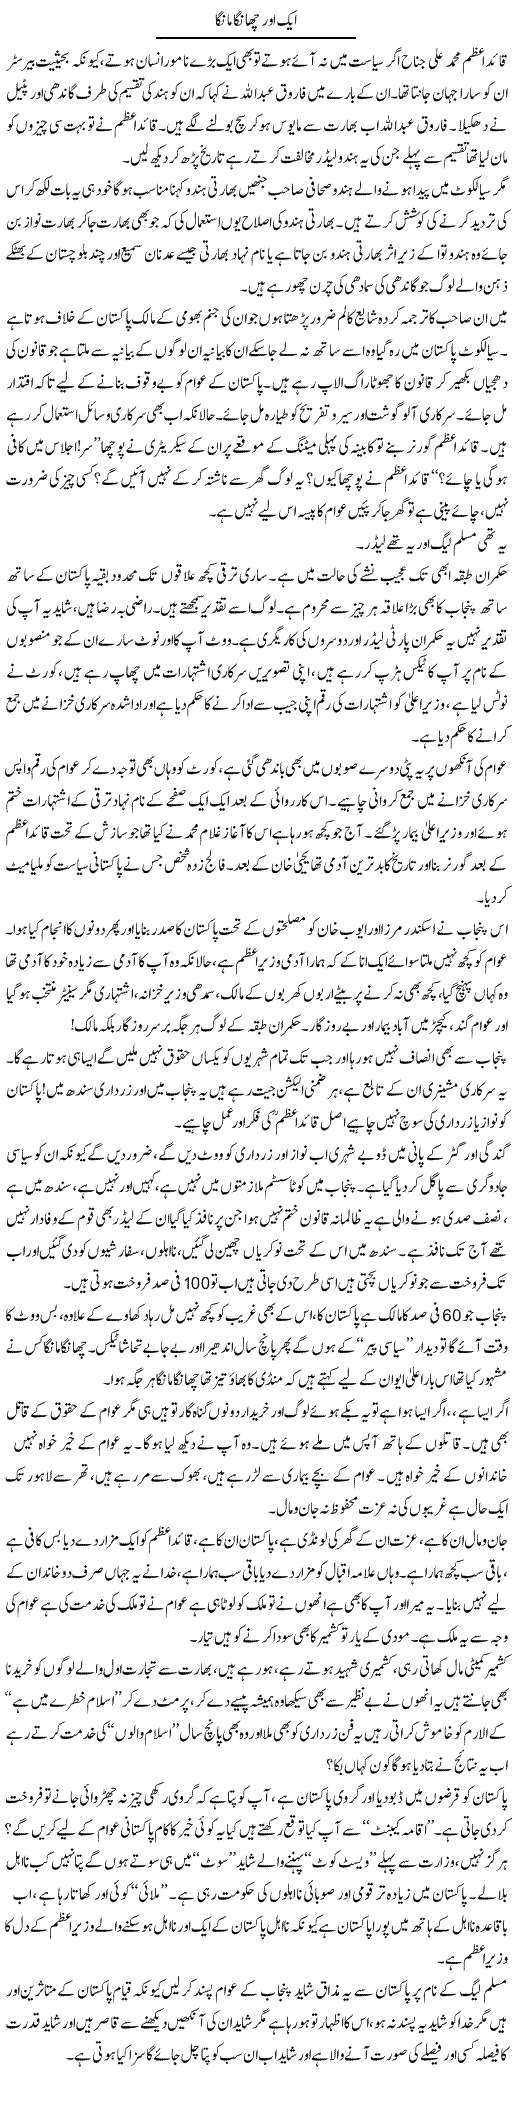 Aik Aur Changa Manga | Syed Noor Azhar Jaffri | Daily Urdu Columns